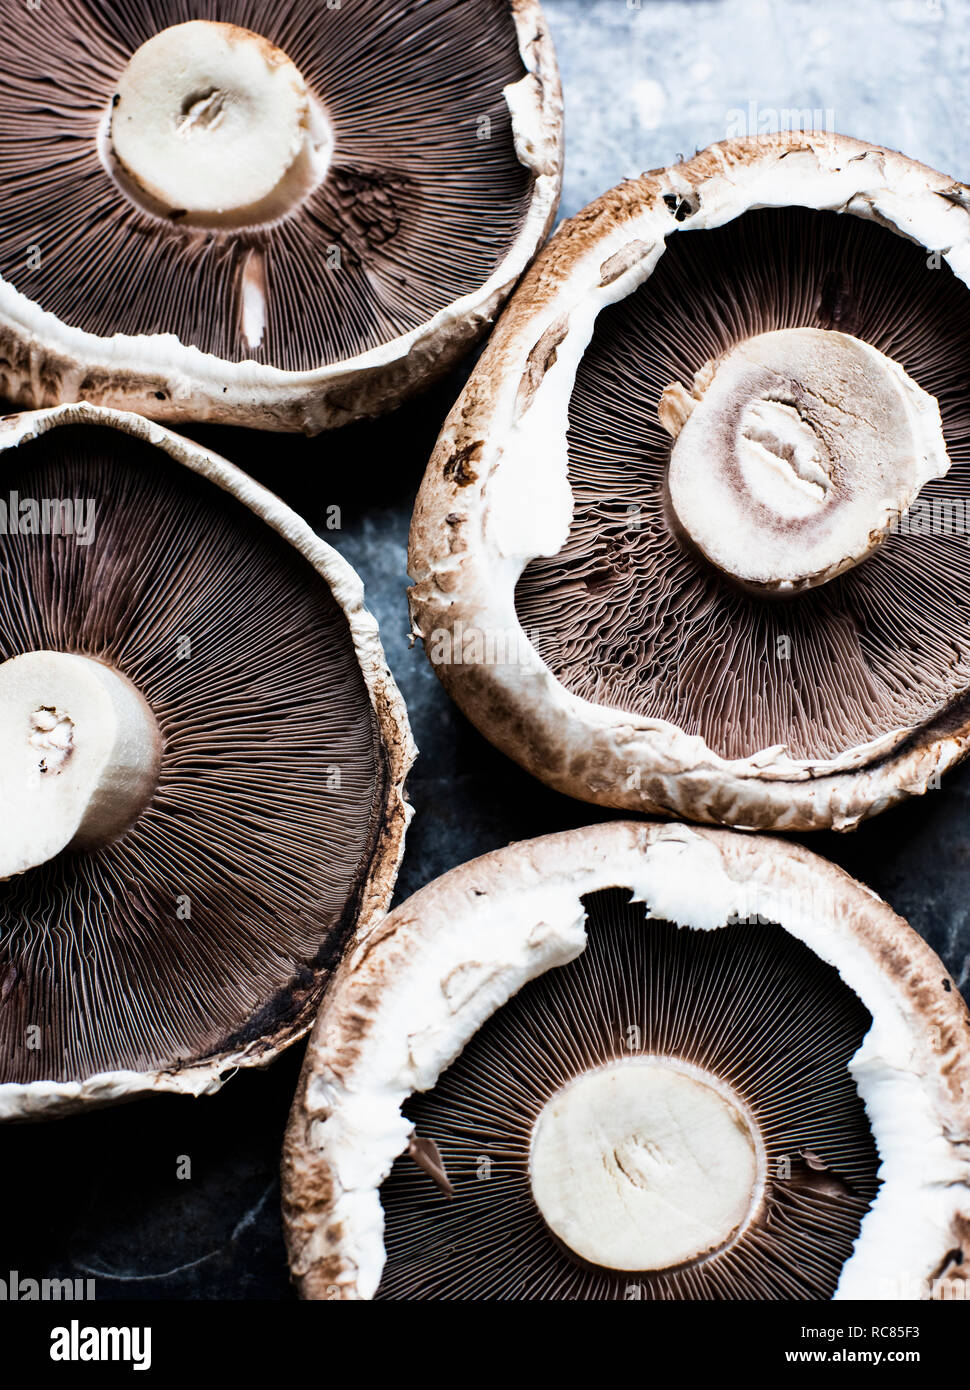 Upside down portabello mushrooms, still life, overhead view Stock Photo